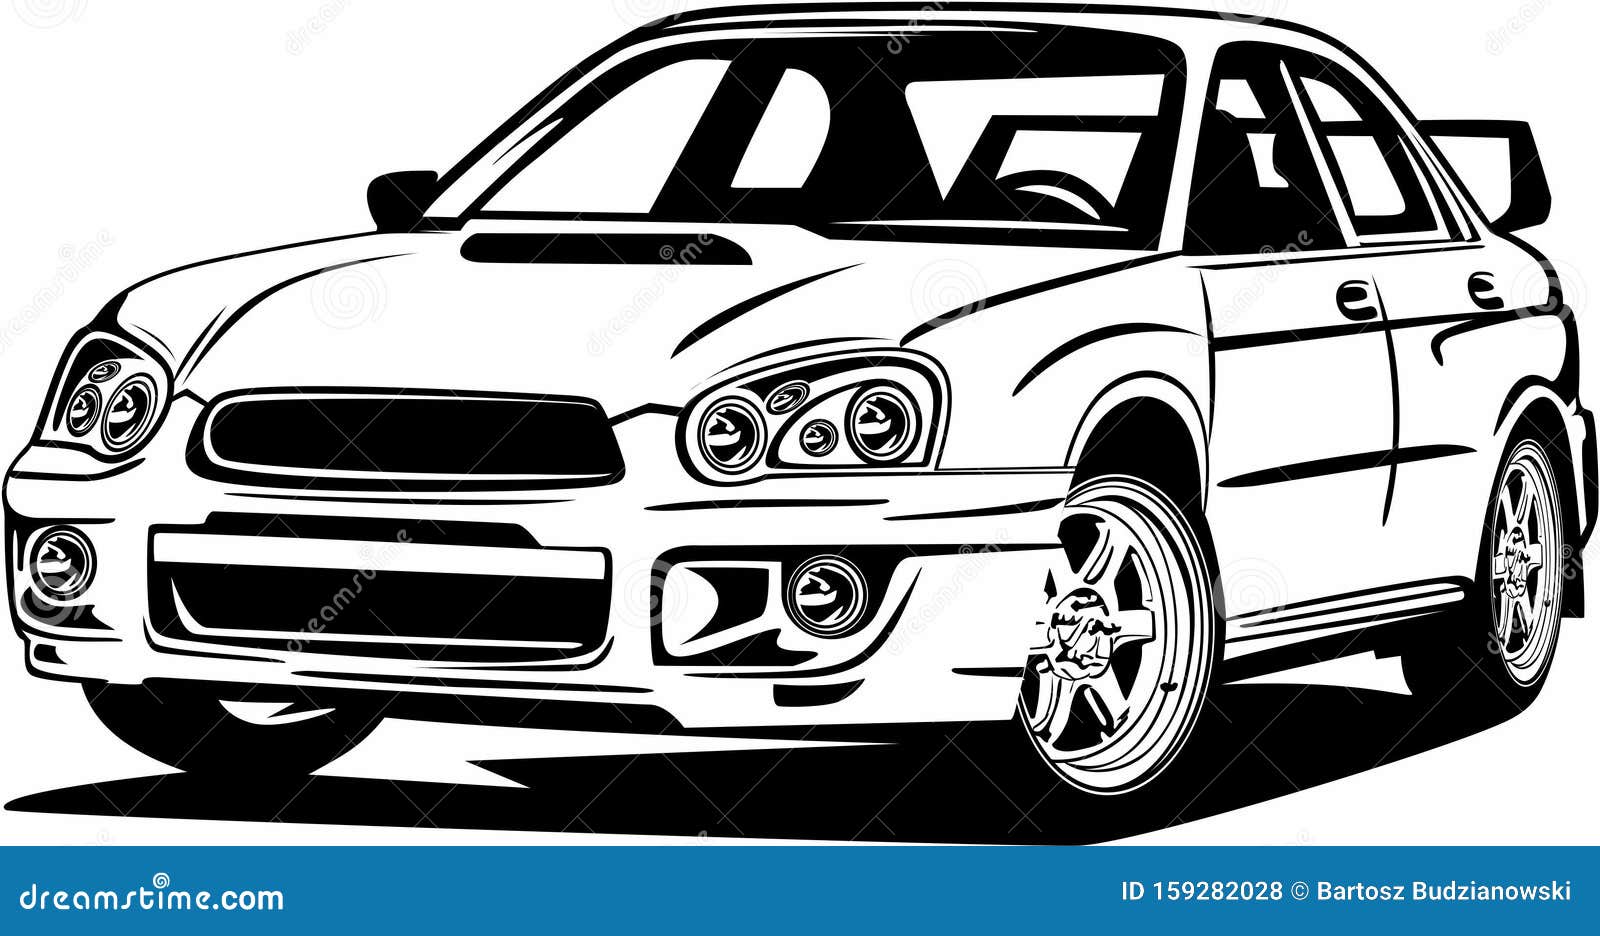 Subaru Sti Vector Illustration | CartoonDealer.com #7781280